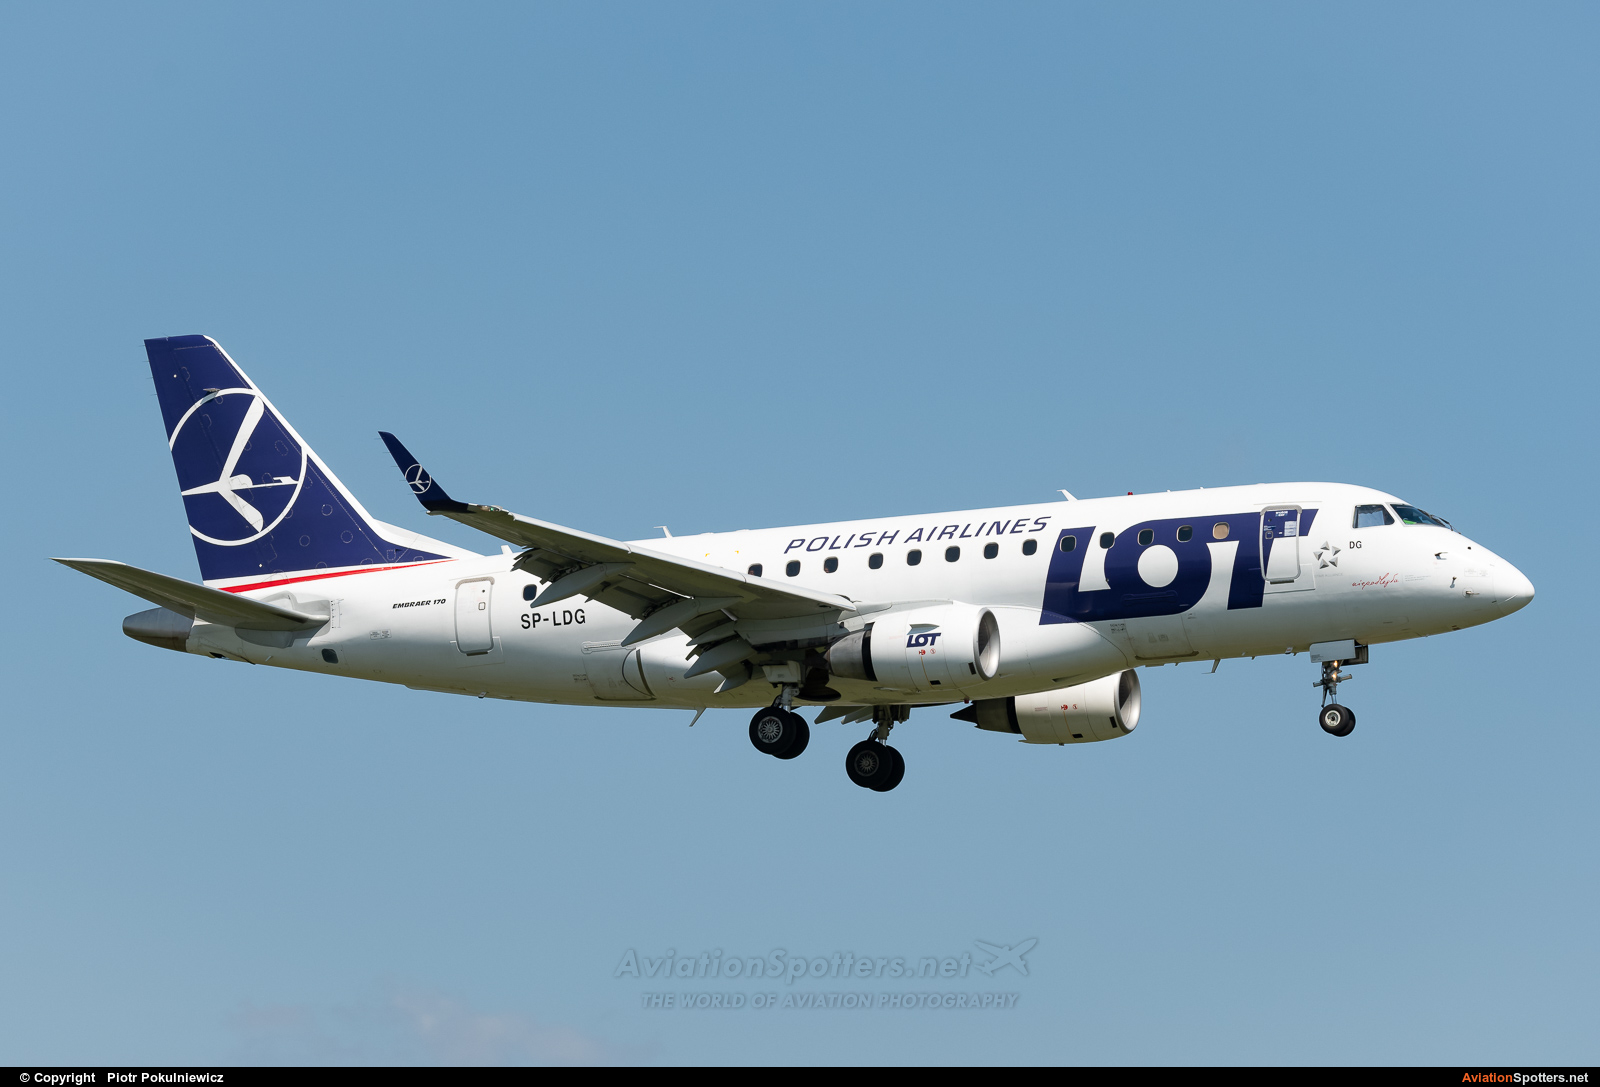 LOT - Polish Airlines  -  170  (SP-LDG) By Piotr Pokulniewicz (Piciu)